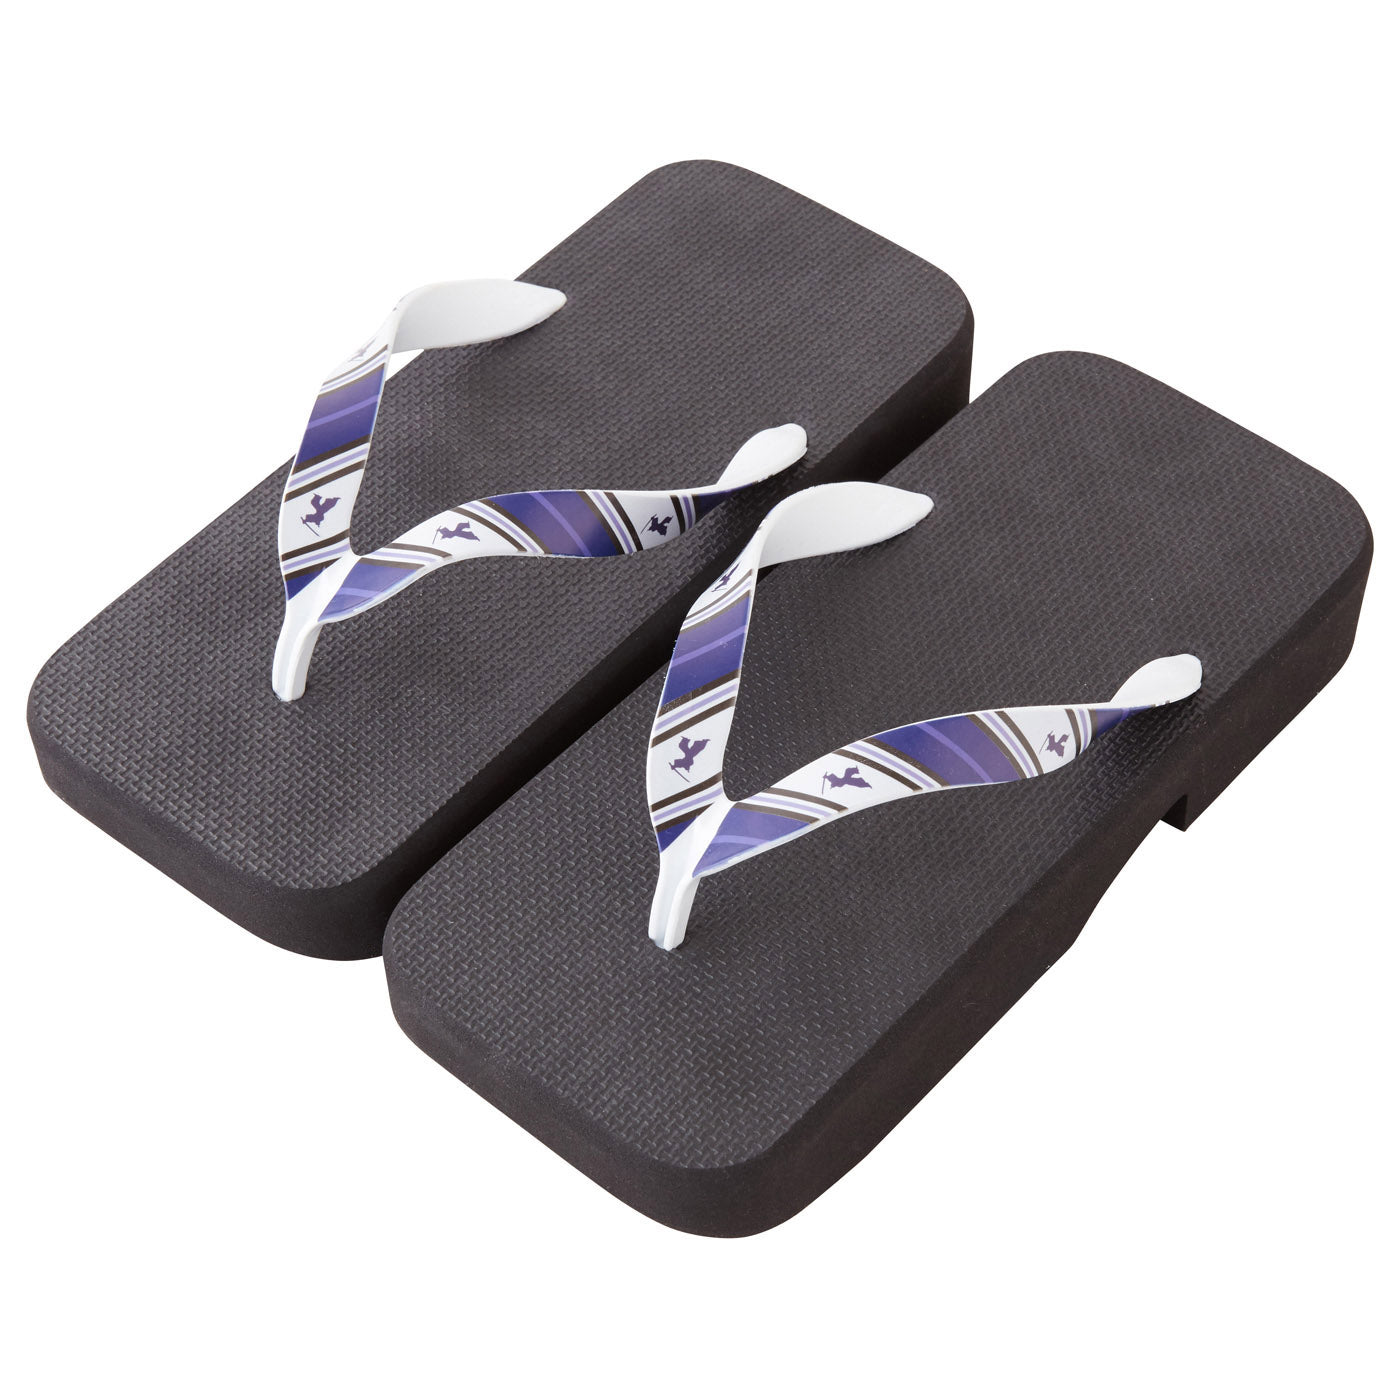 Men’s Japanese Traditional Sandals Crocs -16. Samurai Design Striped Pattern Made in Japan FORTUNA Tokyo